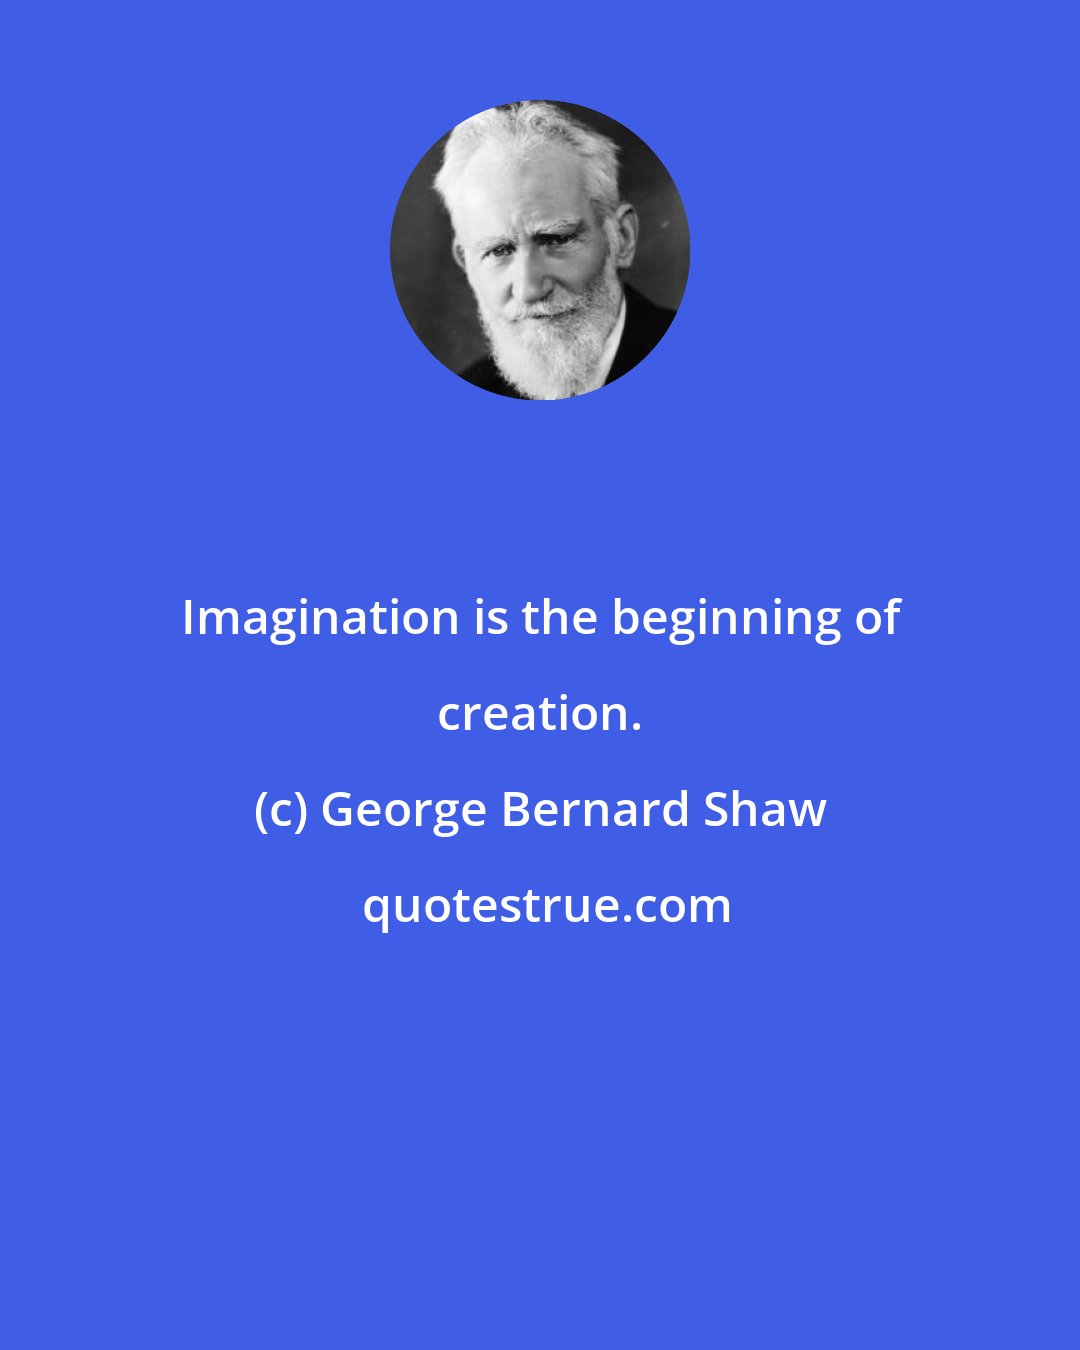 George Bernard Shaw: Imagination is the beginning of creation.